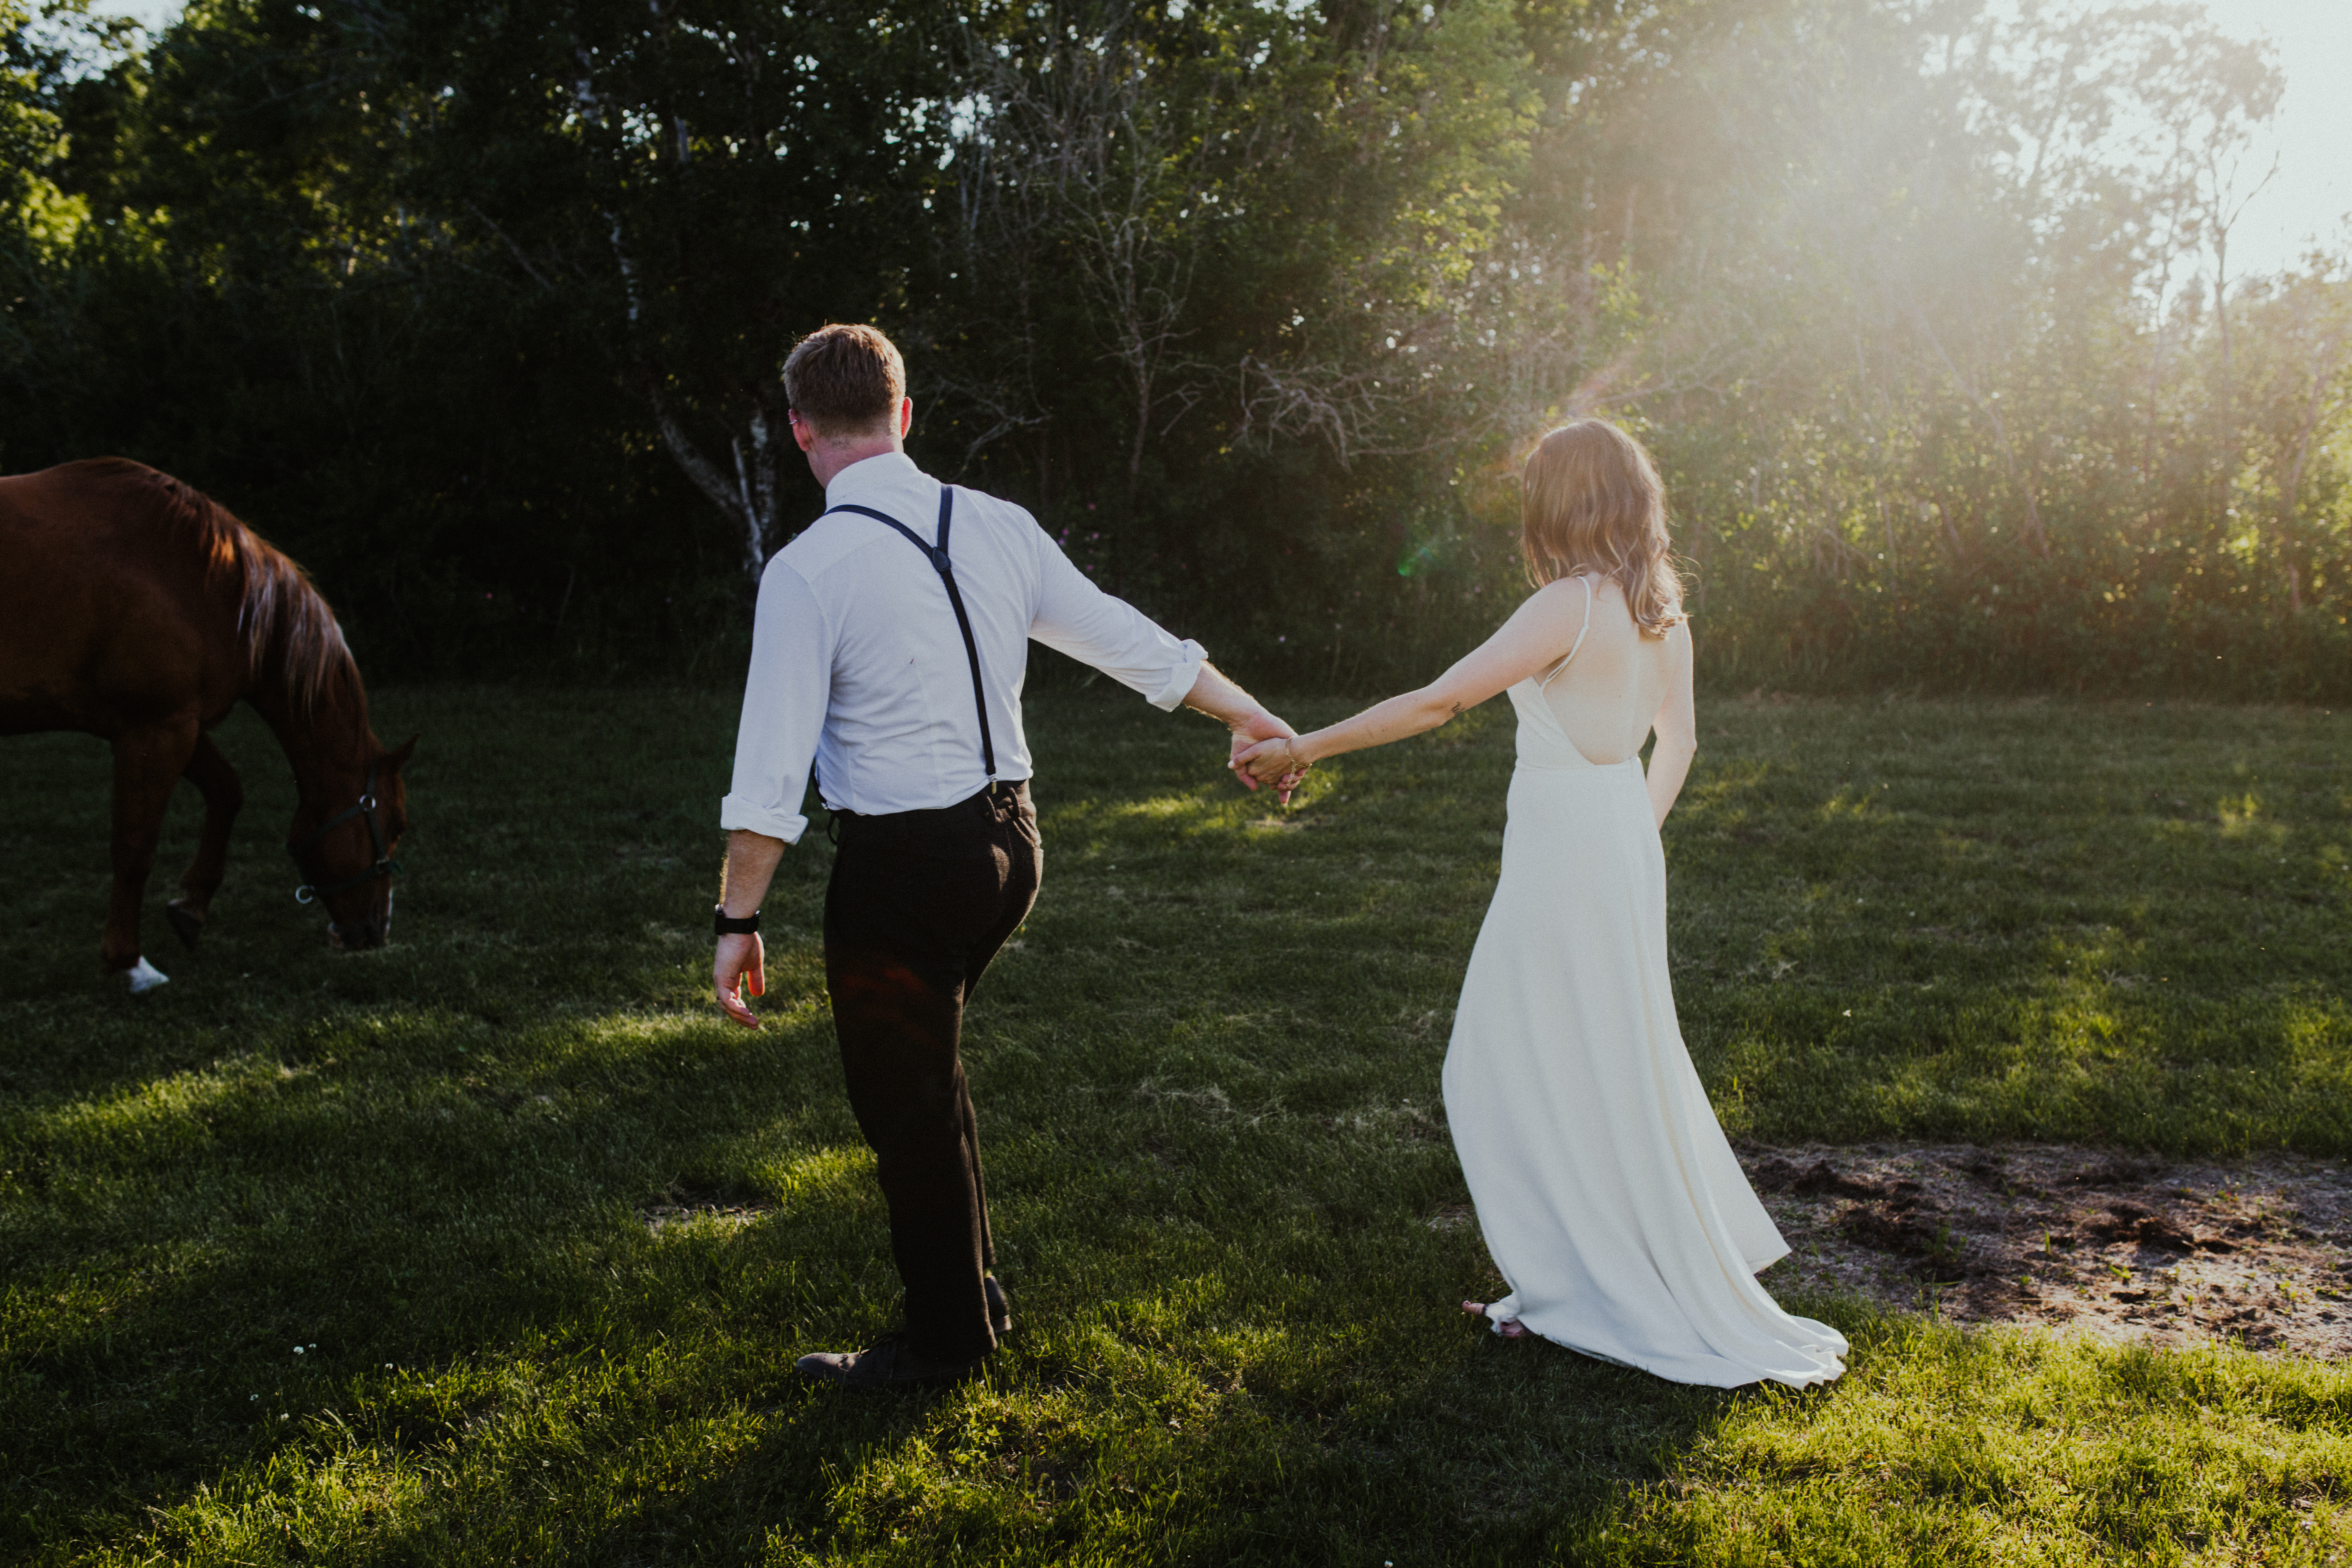 Tedi & Evan - Backyard wedding - Amanda Douglas Events